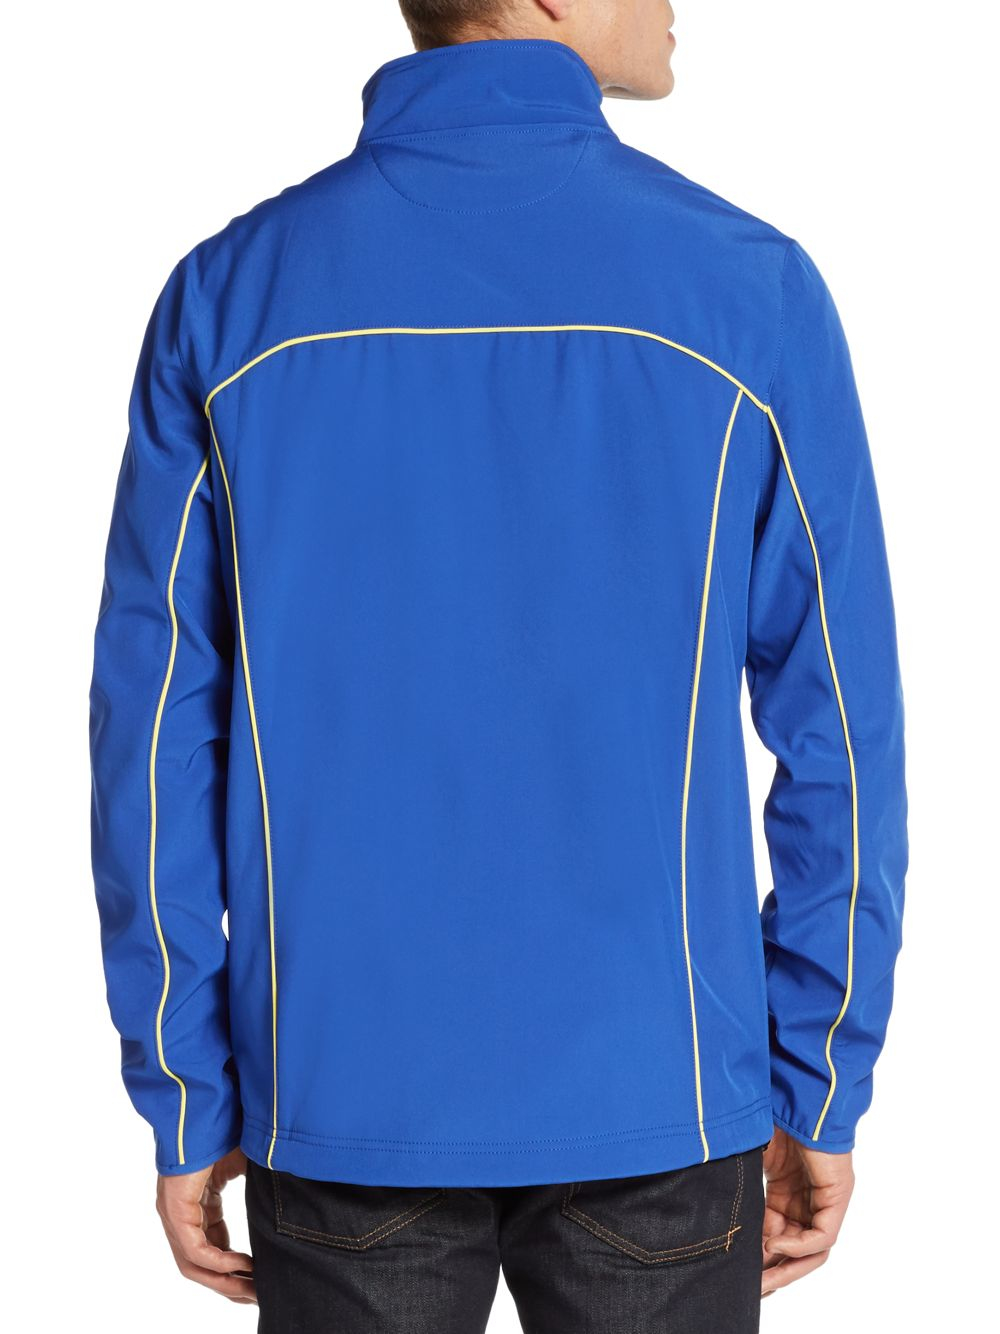 Lyst Fila Adventure Track Jacket in Blue for Men